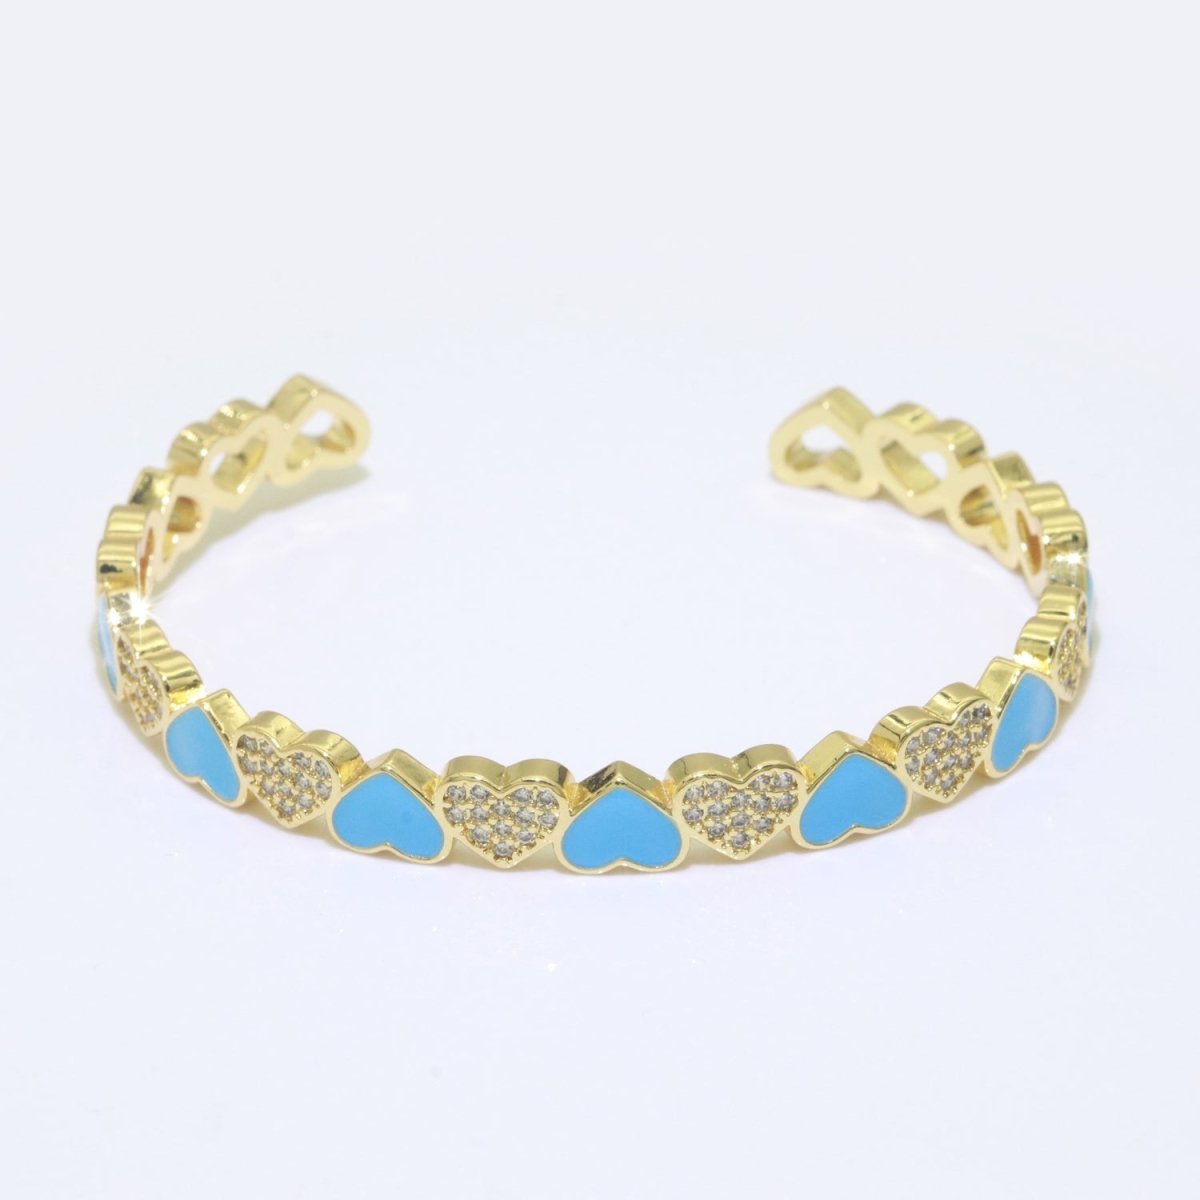 Blue Heart Enamel 14k Gold Filled Adjustable Bangle, Gold Cuff Bangle Bracelet Micro Pave Jewelry - DLUXCA